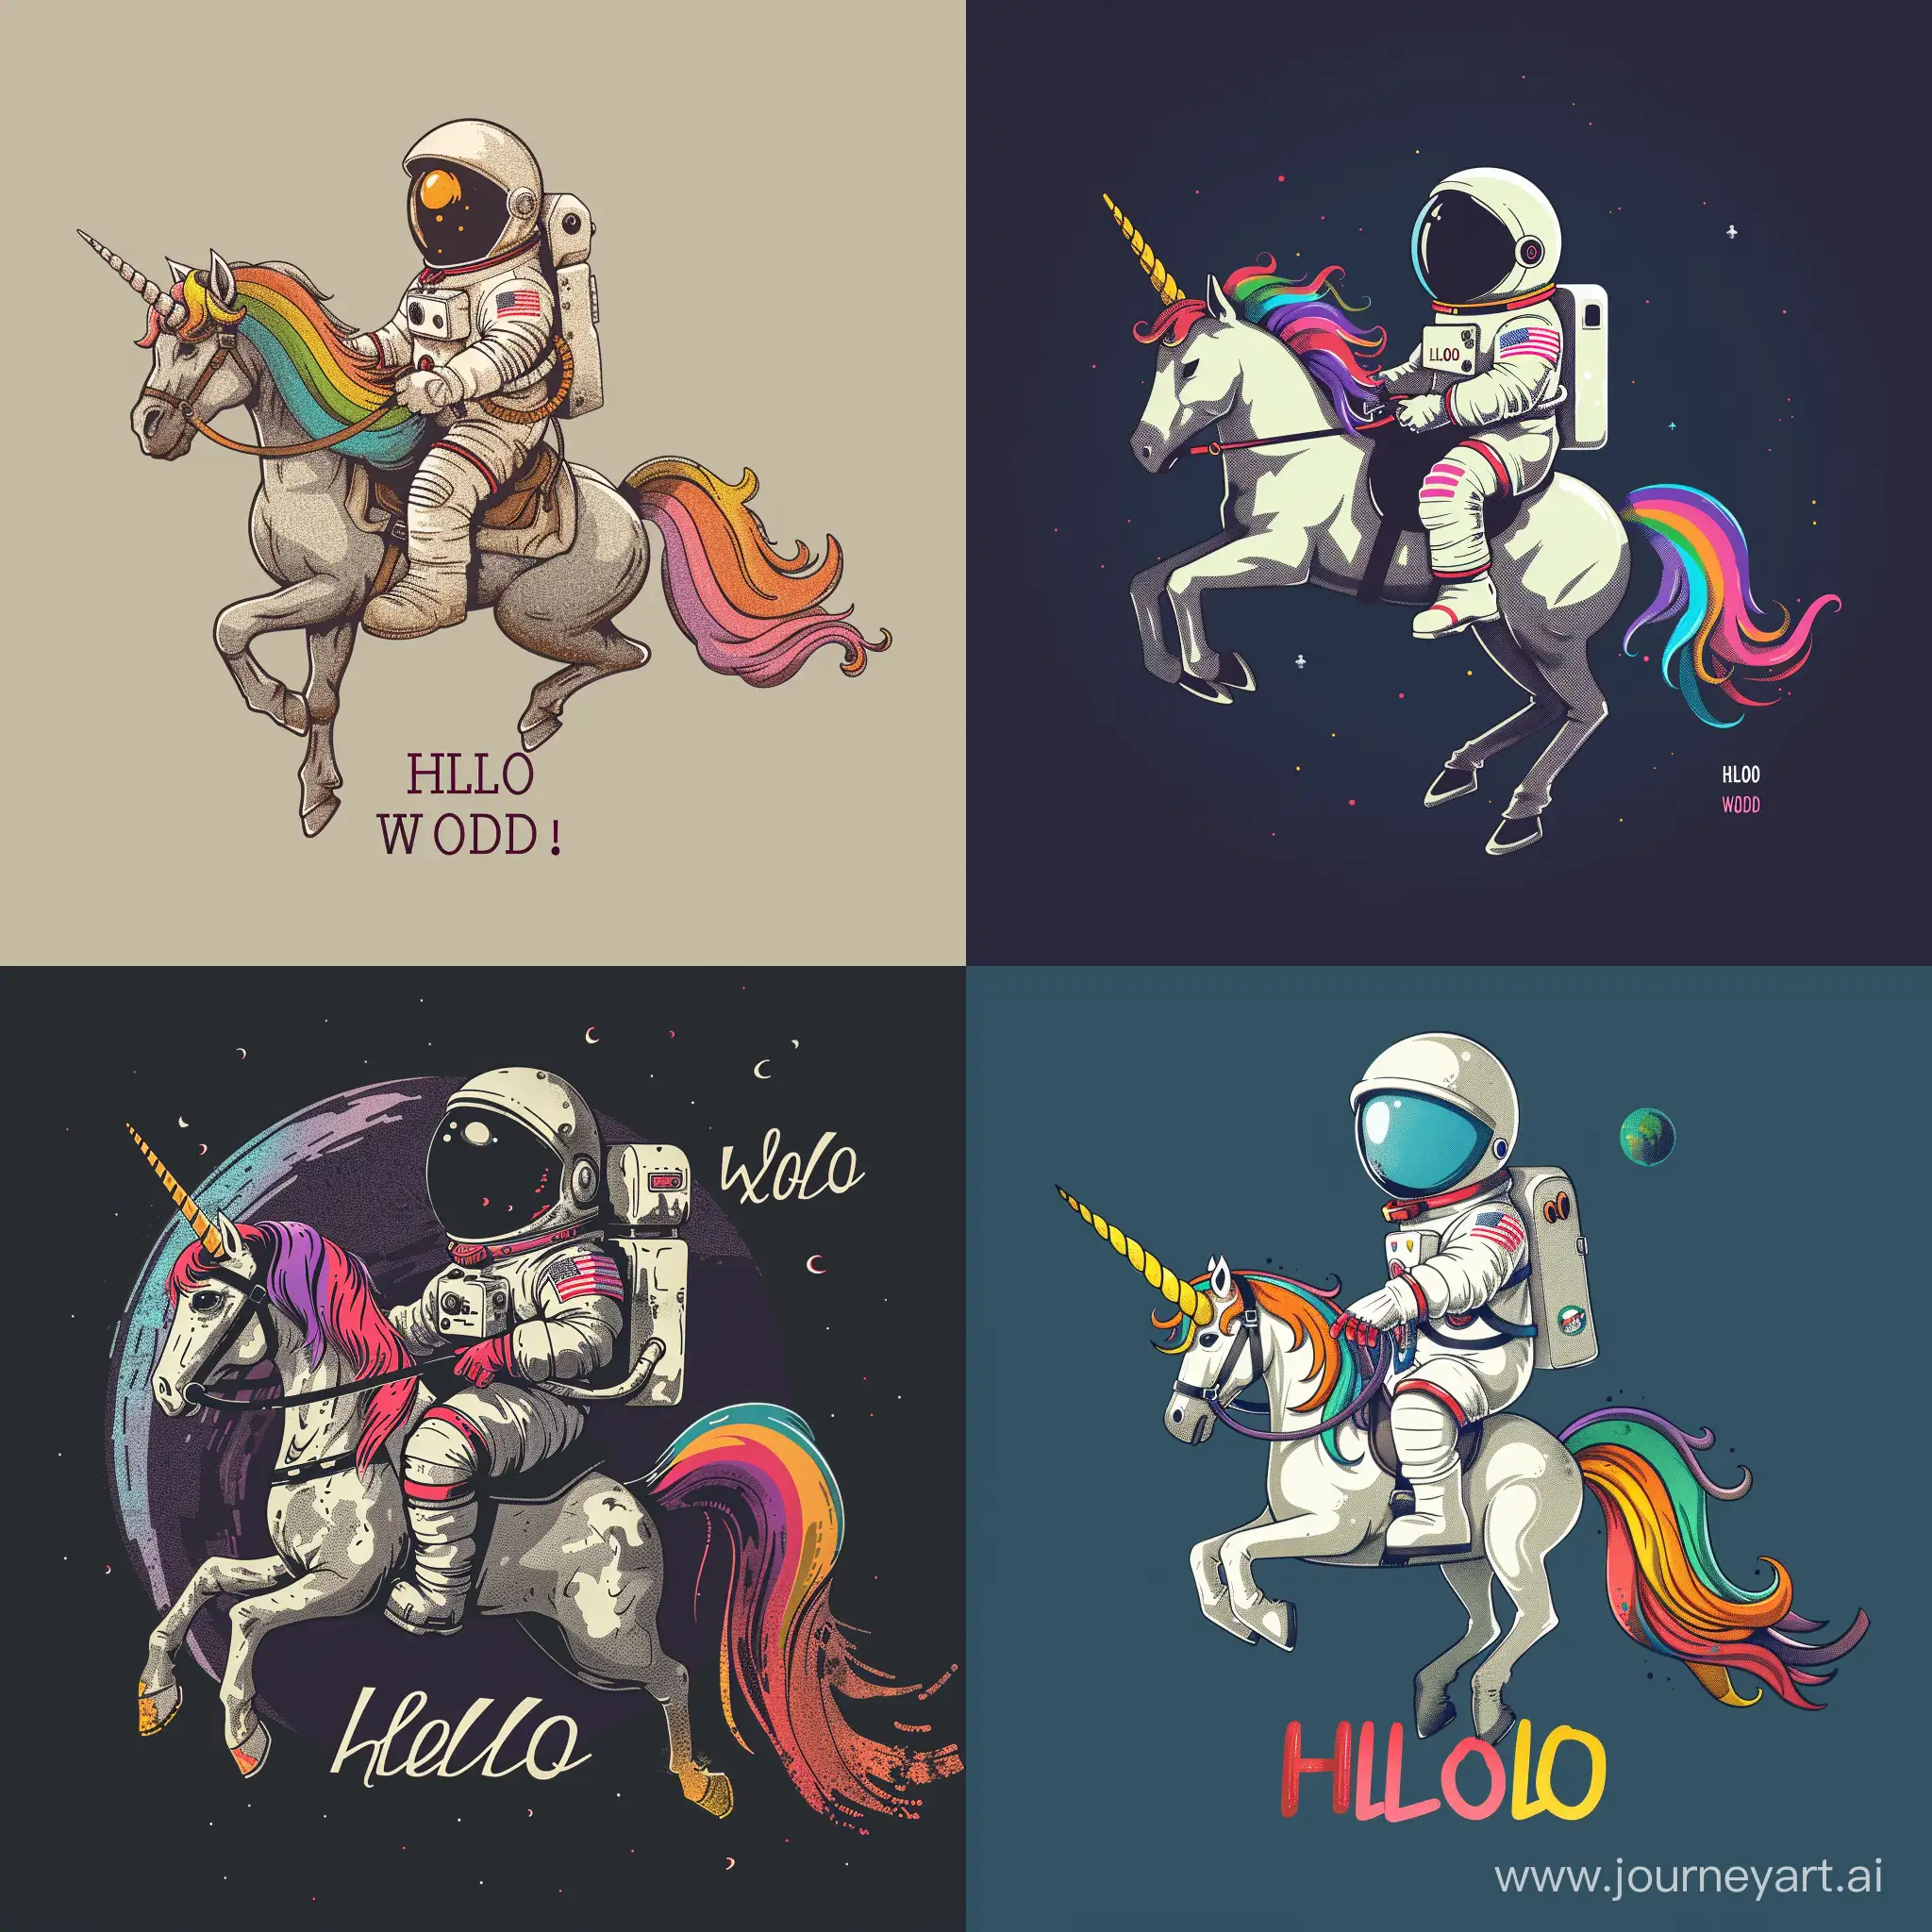 An astronaut riding a rainbow unicorn, cinematic, dramatic, with text:"hello world"